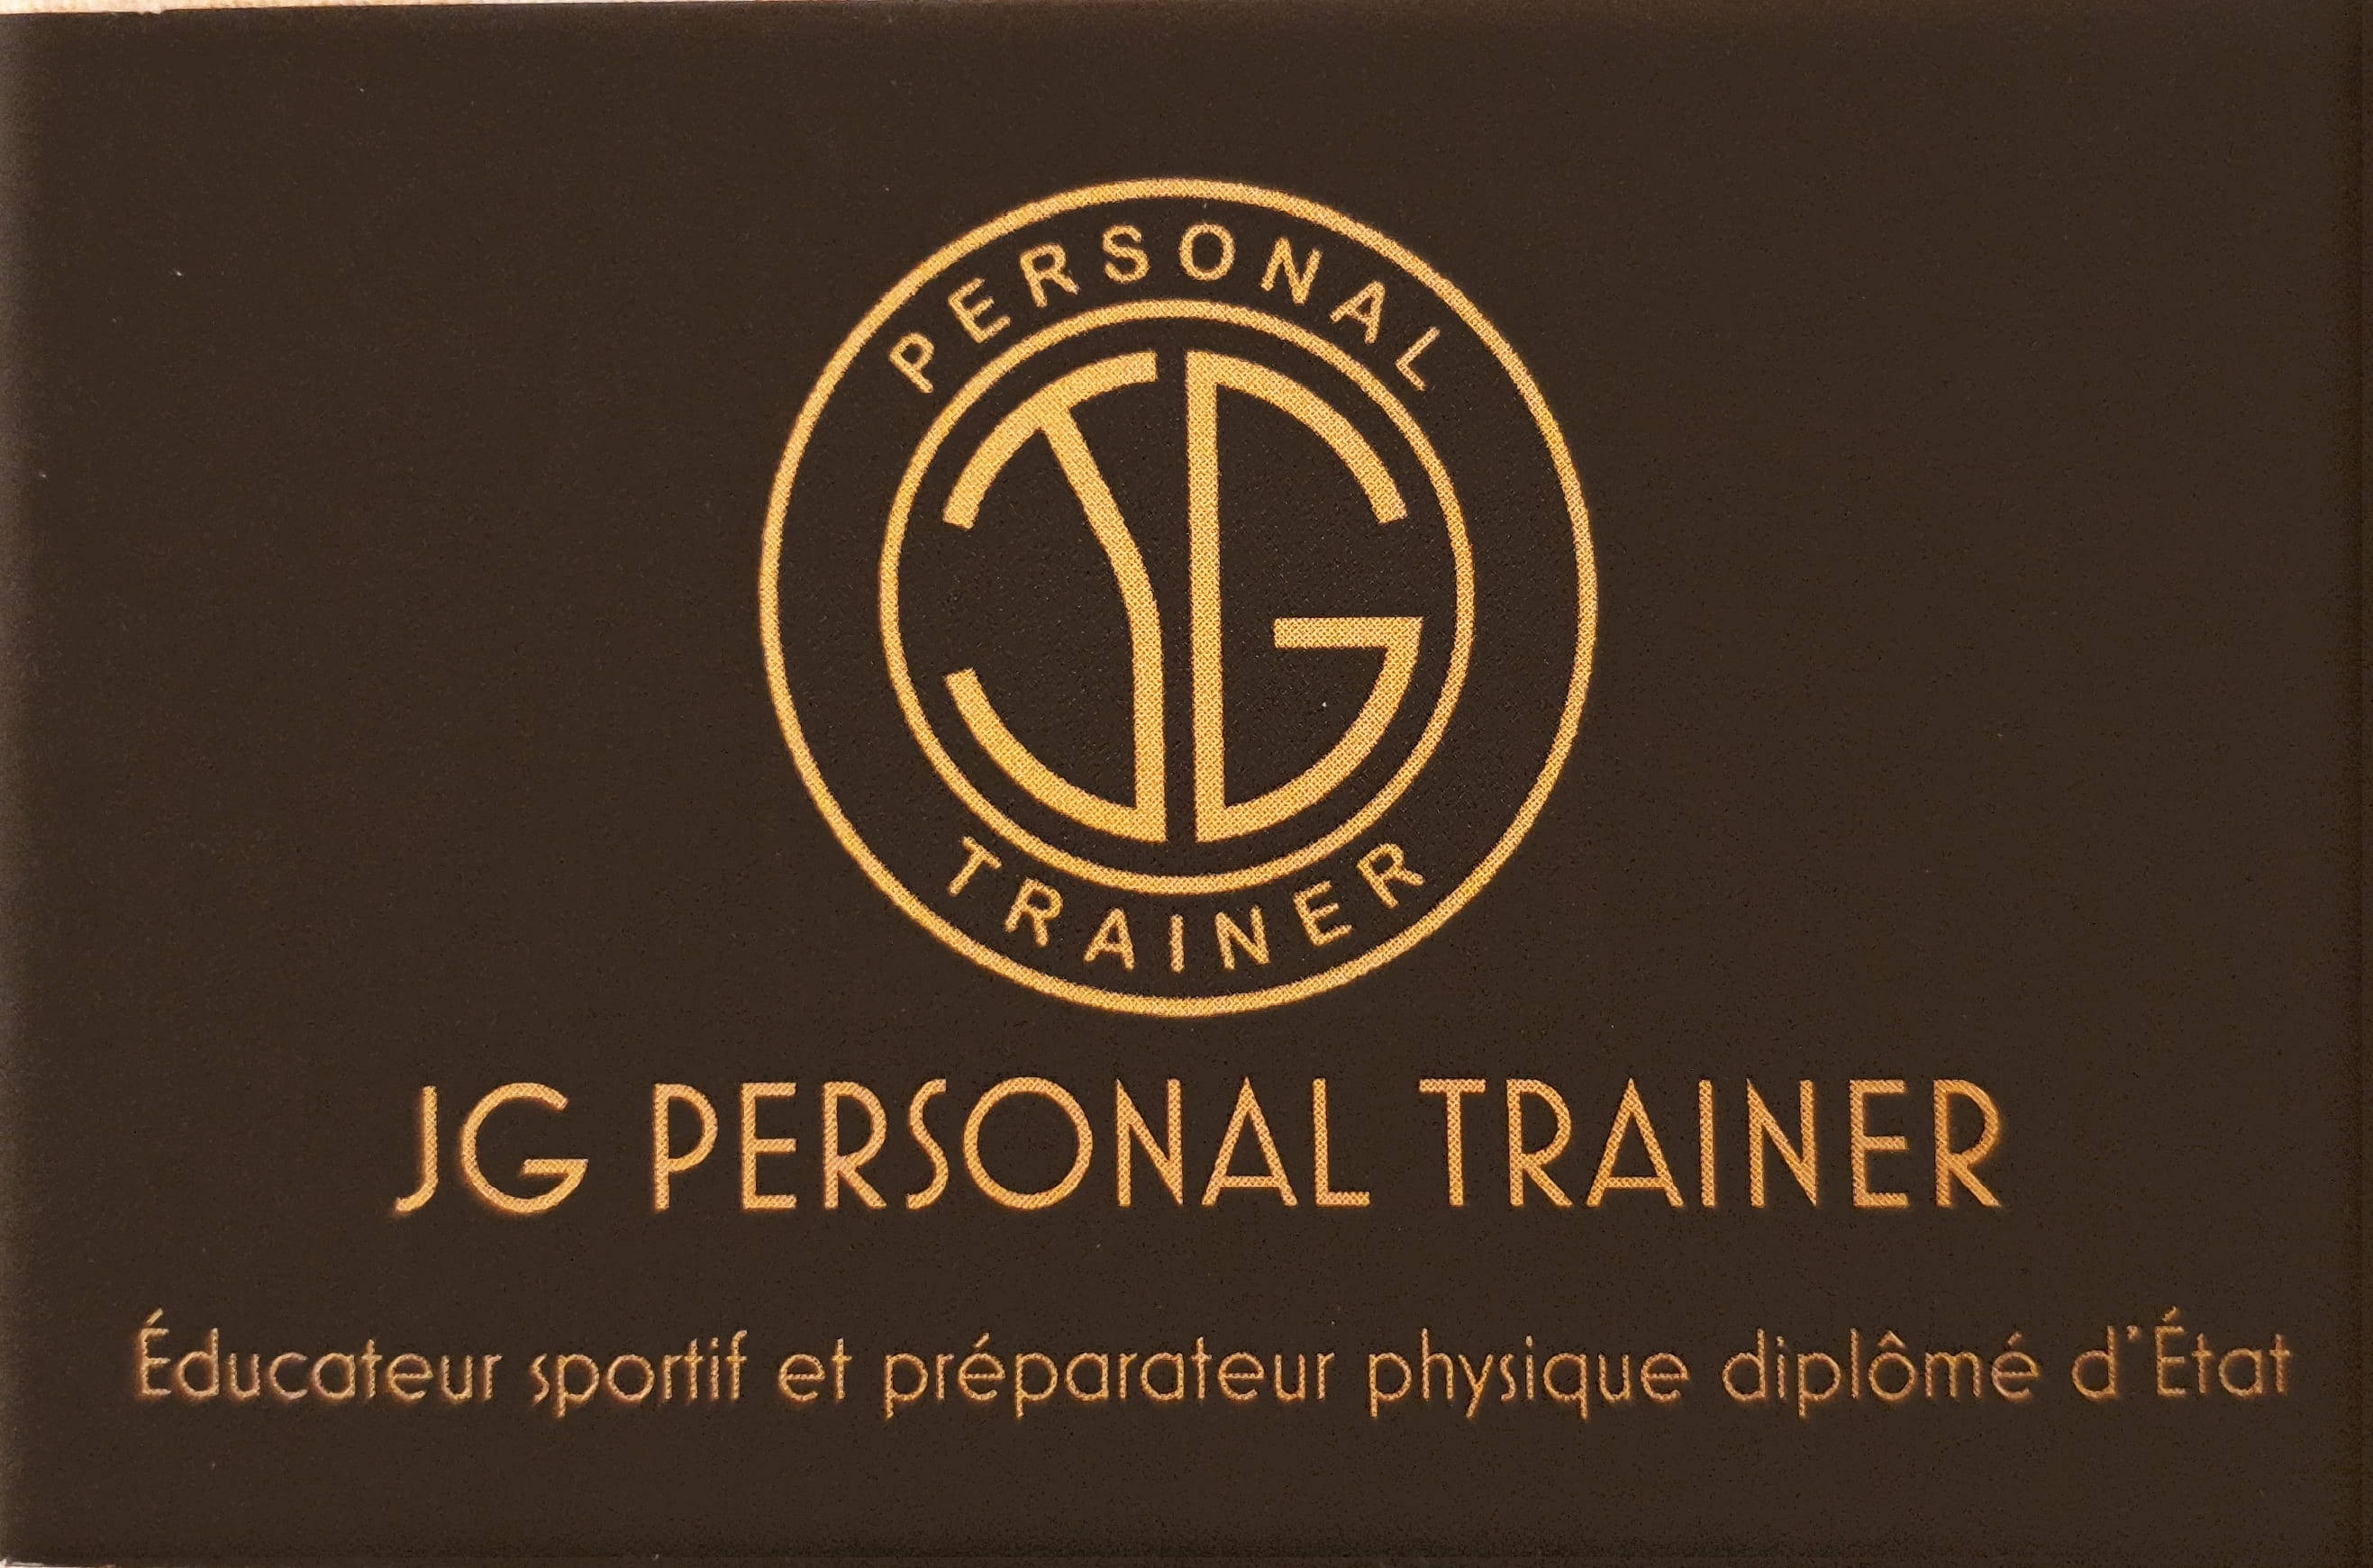 JG personal trainer.jpg